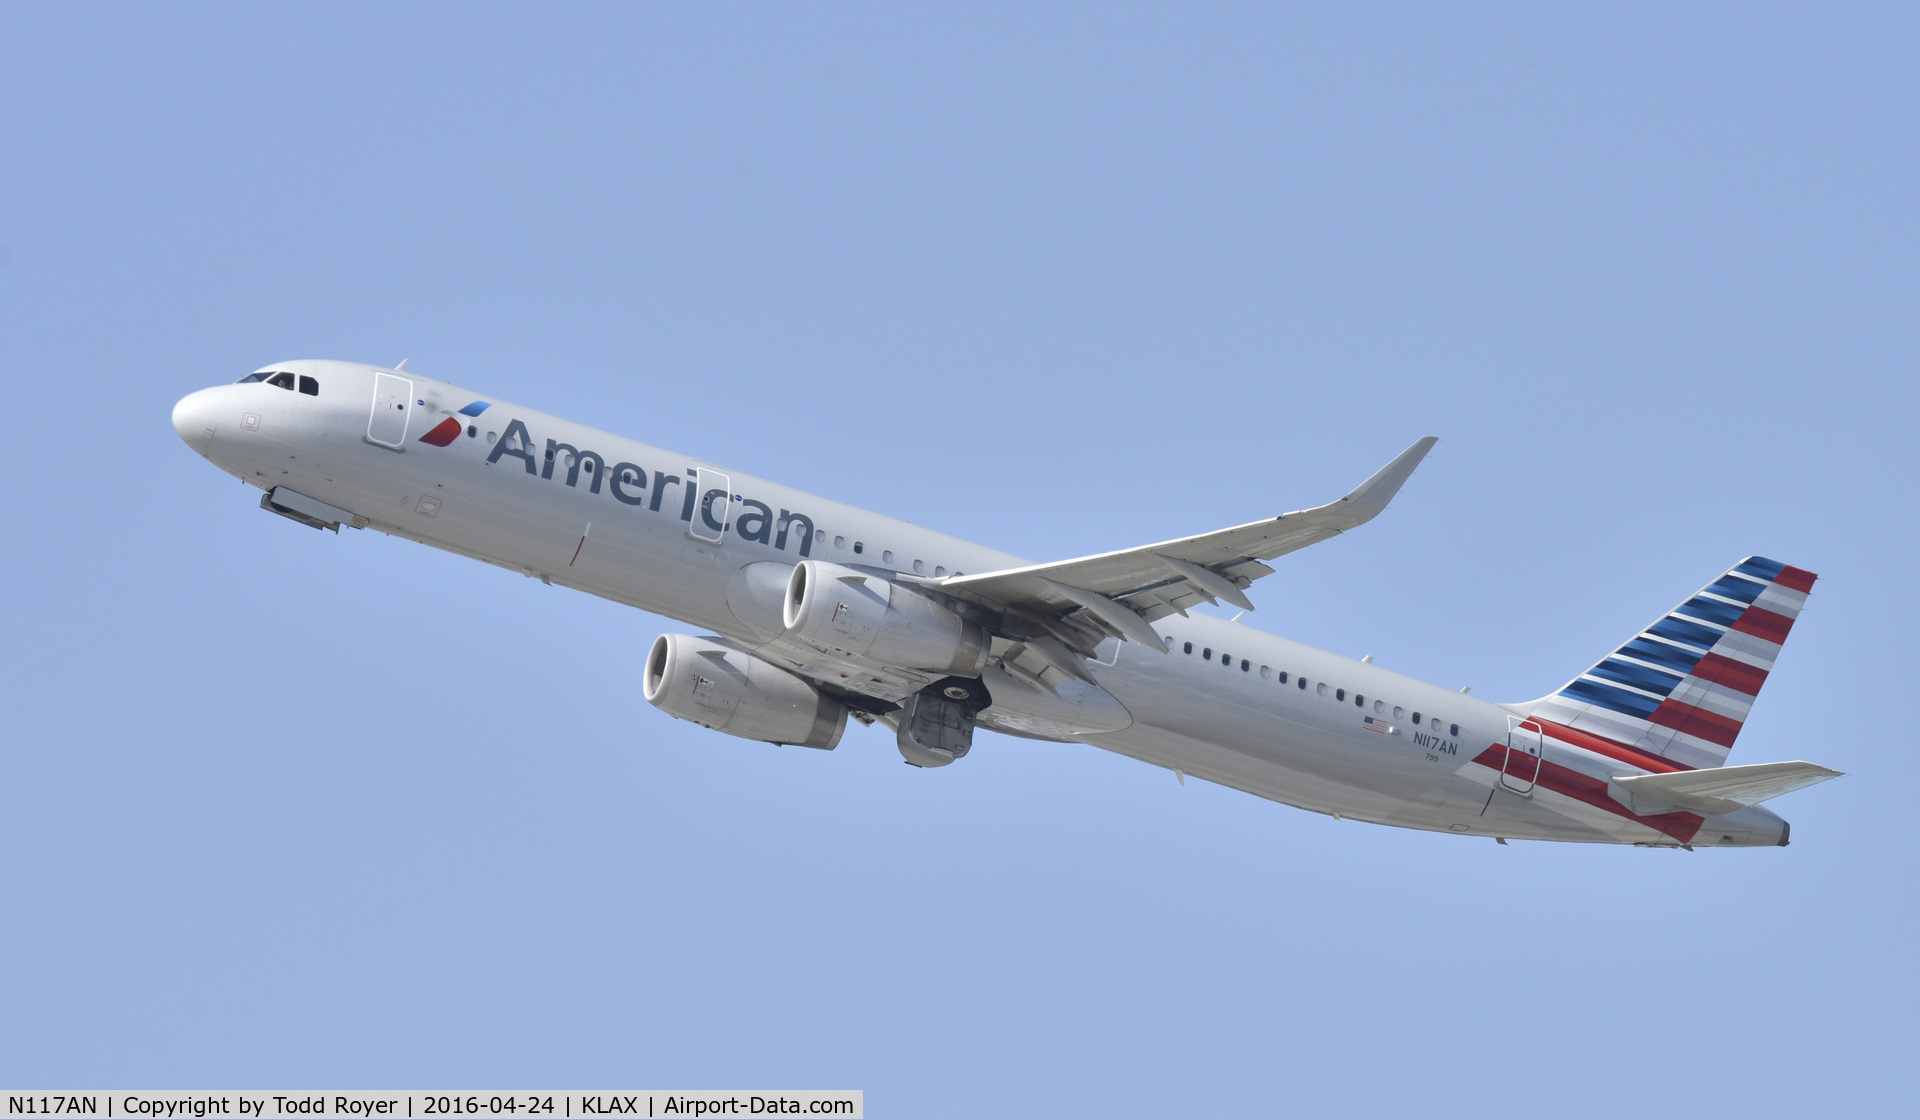 N117AN, 2014 Airbus A321-231 C/N 6094, Departing LAX on 25R